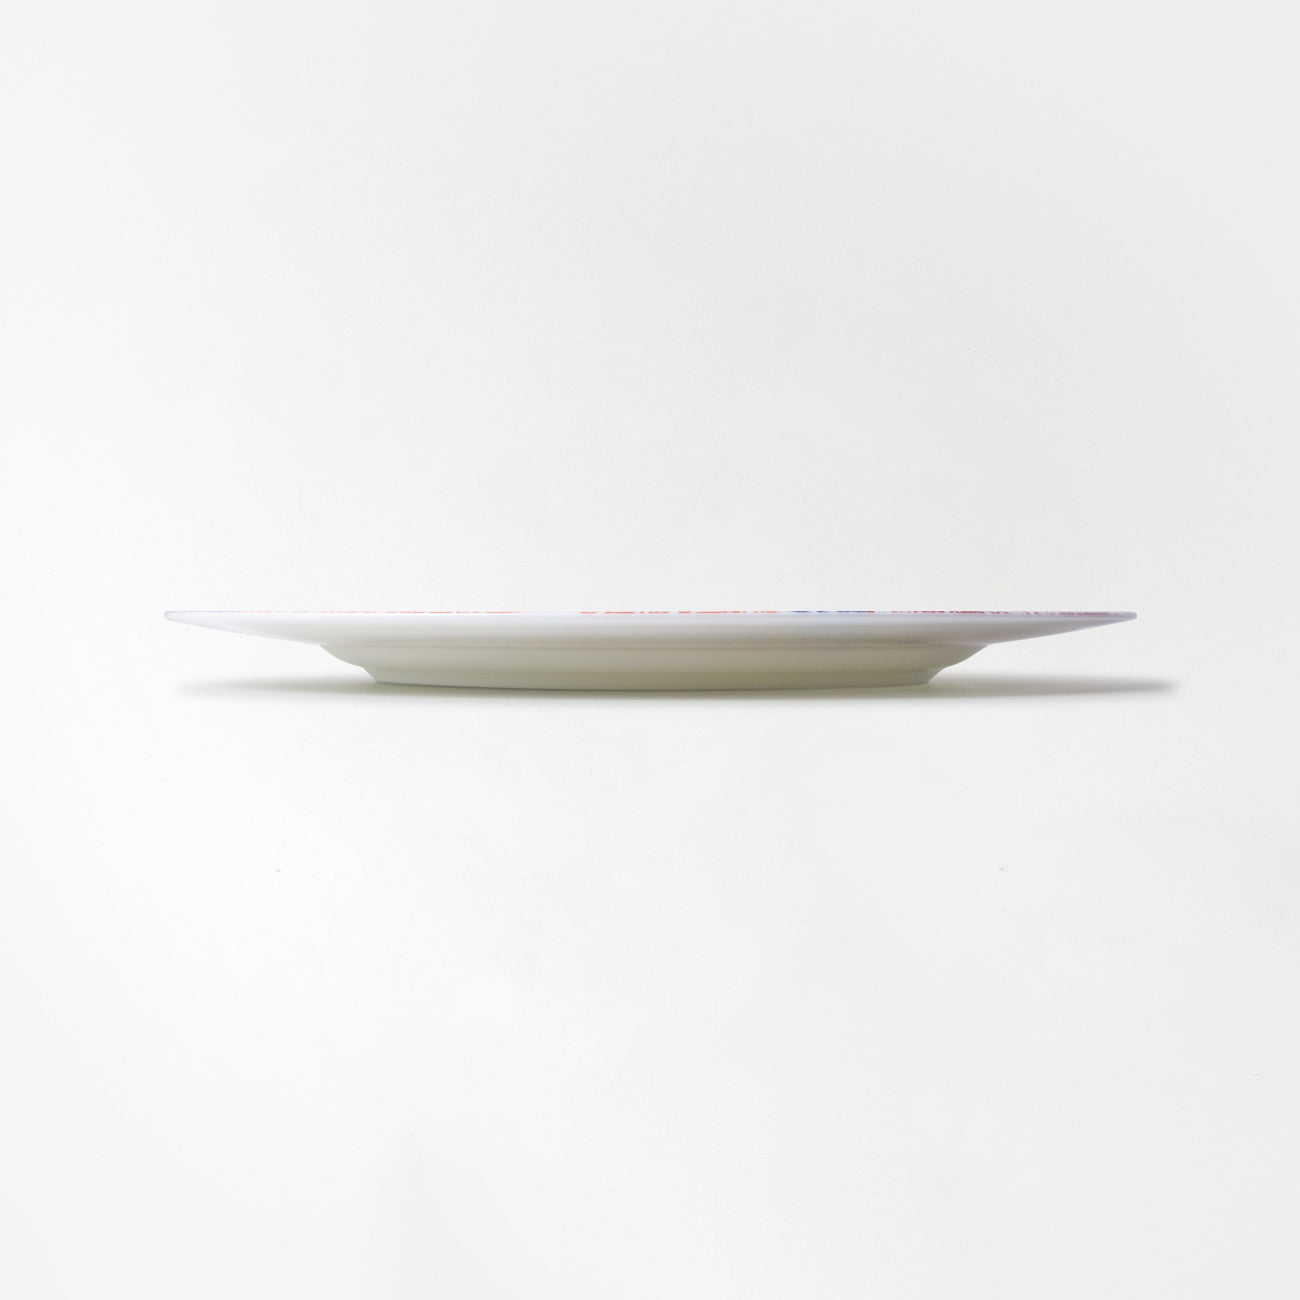 【復興支援商品】ART PLATE 25cm Fumie Shimaoka 「宇宙」